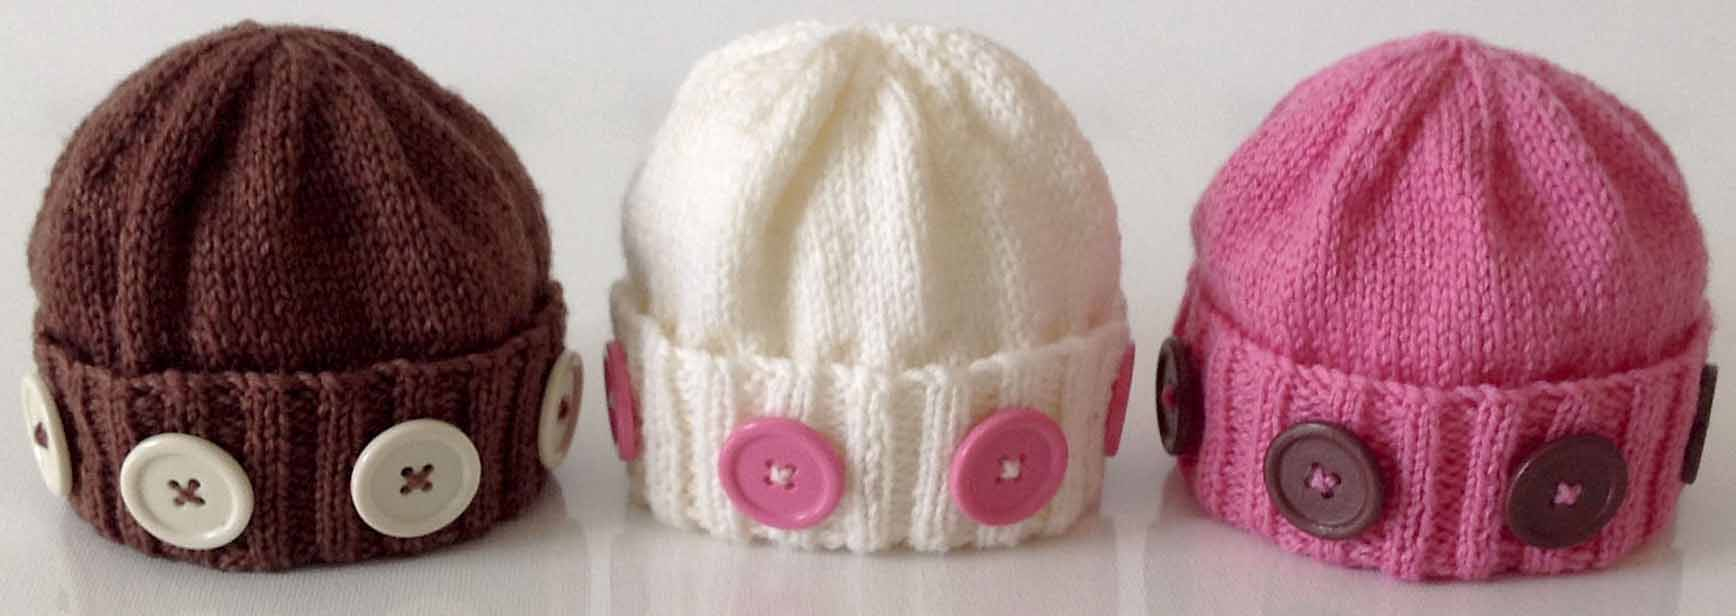 Free Knitting Patterns For Newborn Hats Free Premature Ba Hats Knitting Patterns